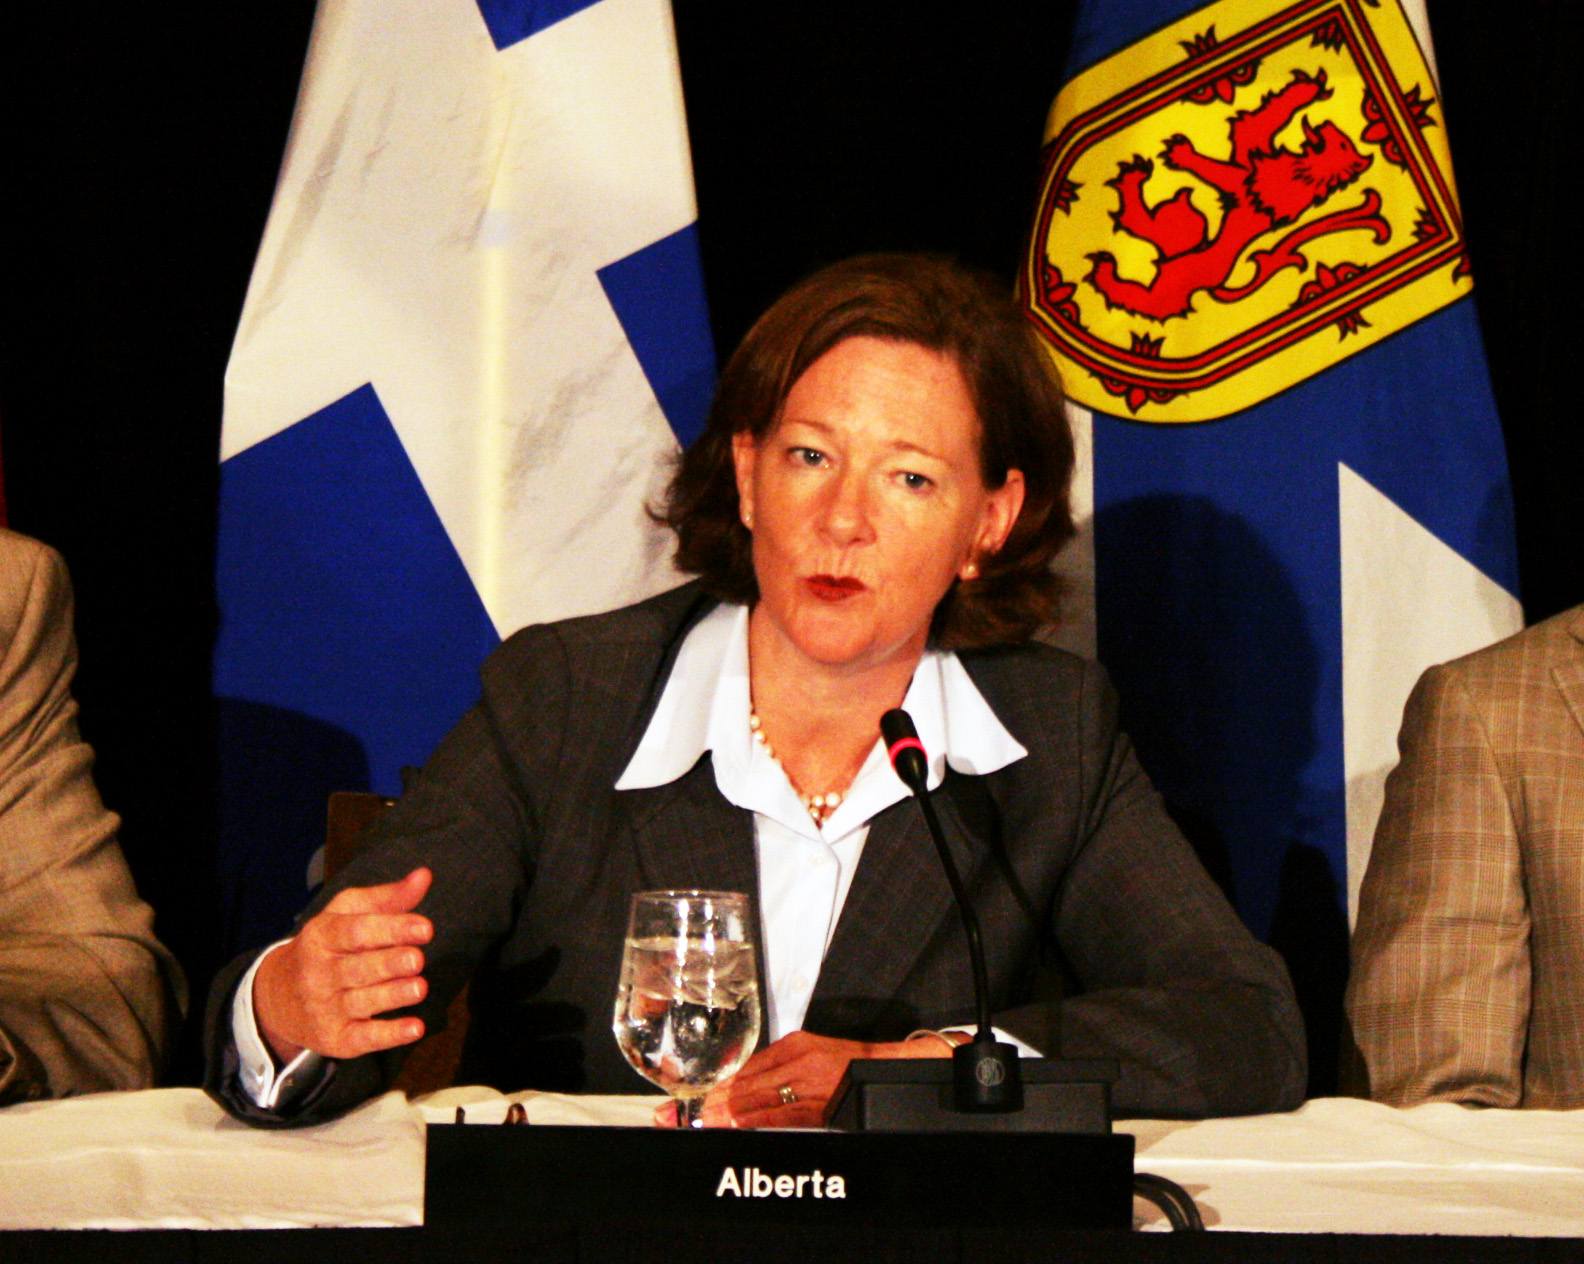 Alberta Premier, Alison Redford